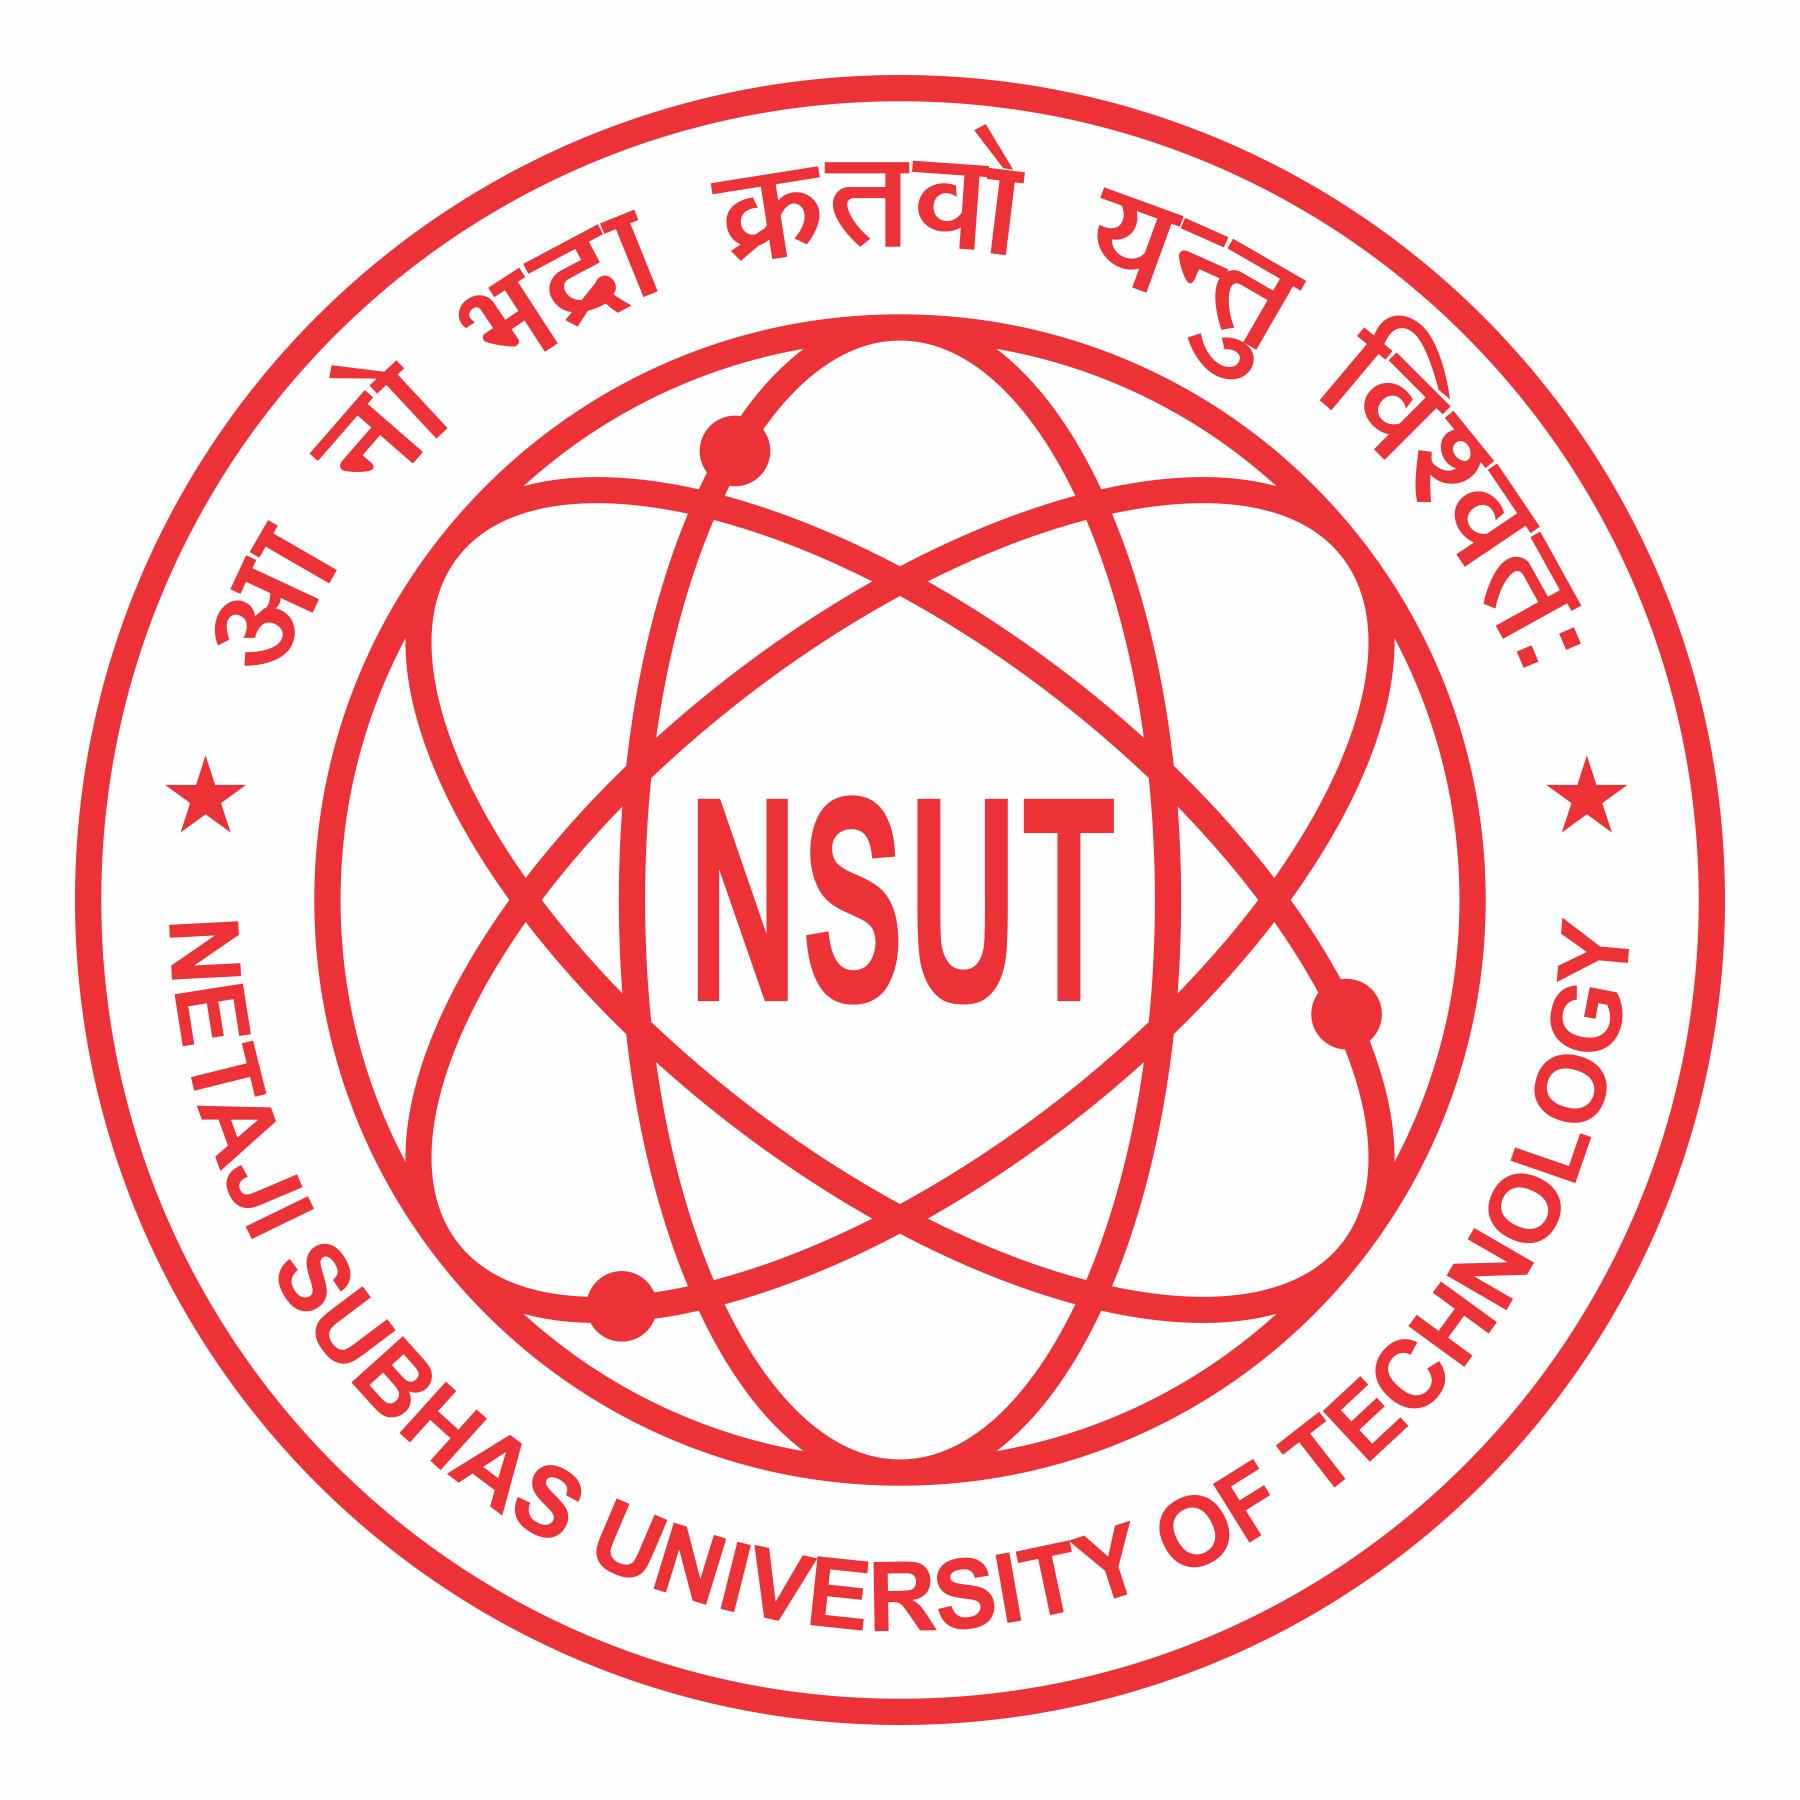 Netaji Subhas University of Technology|Schools|Education